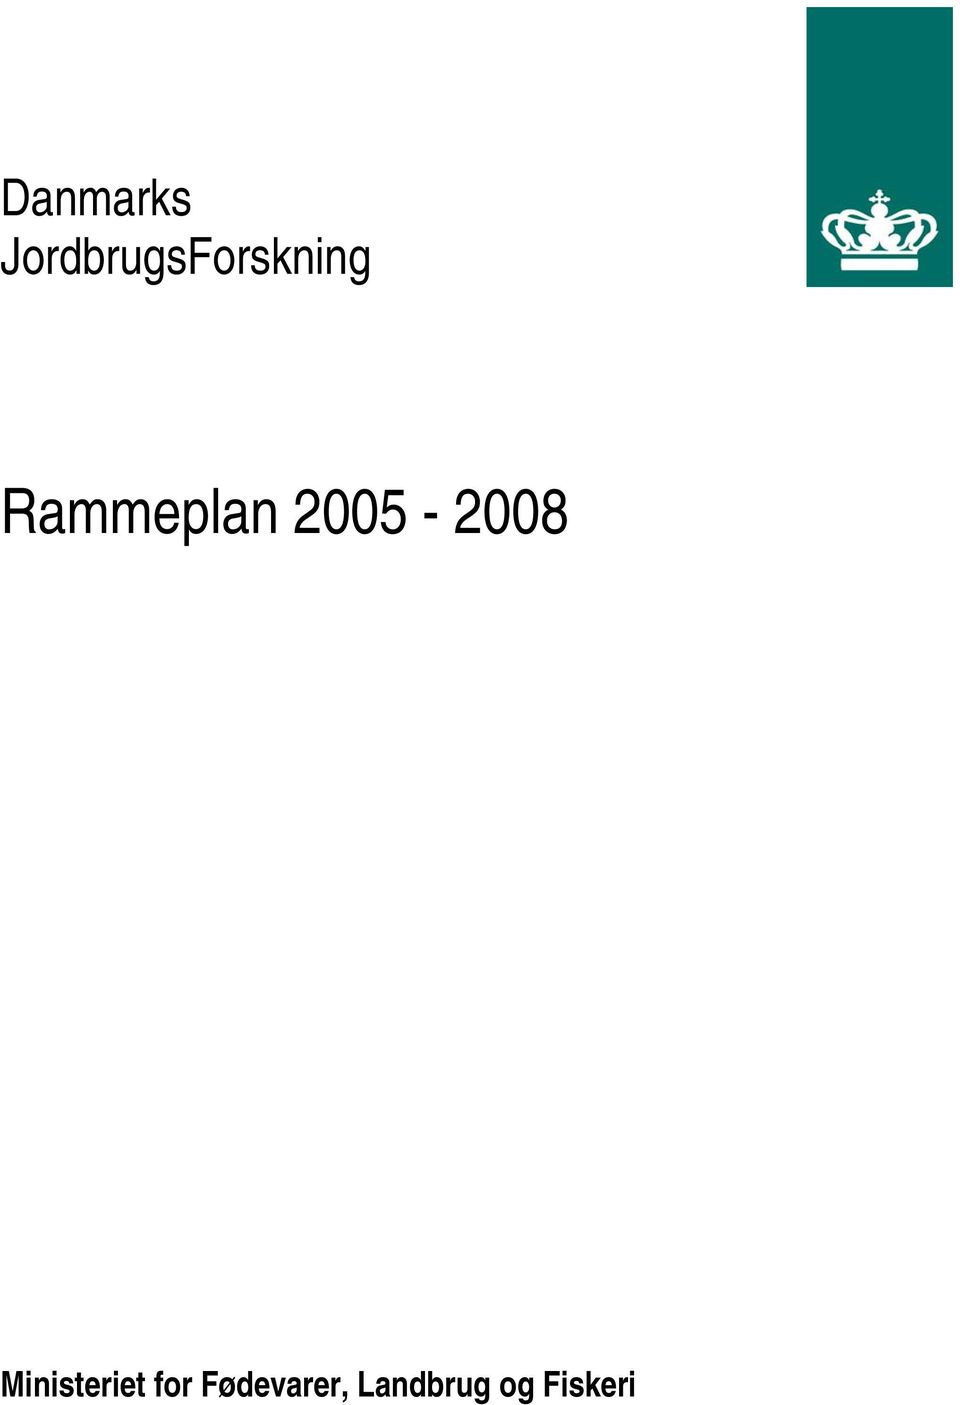 Rammeplan 2005-2008